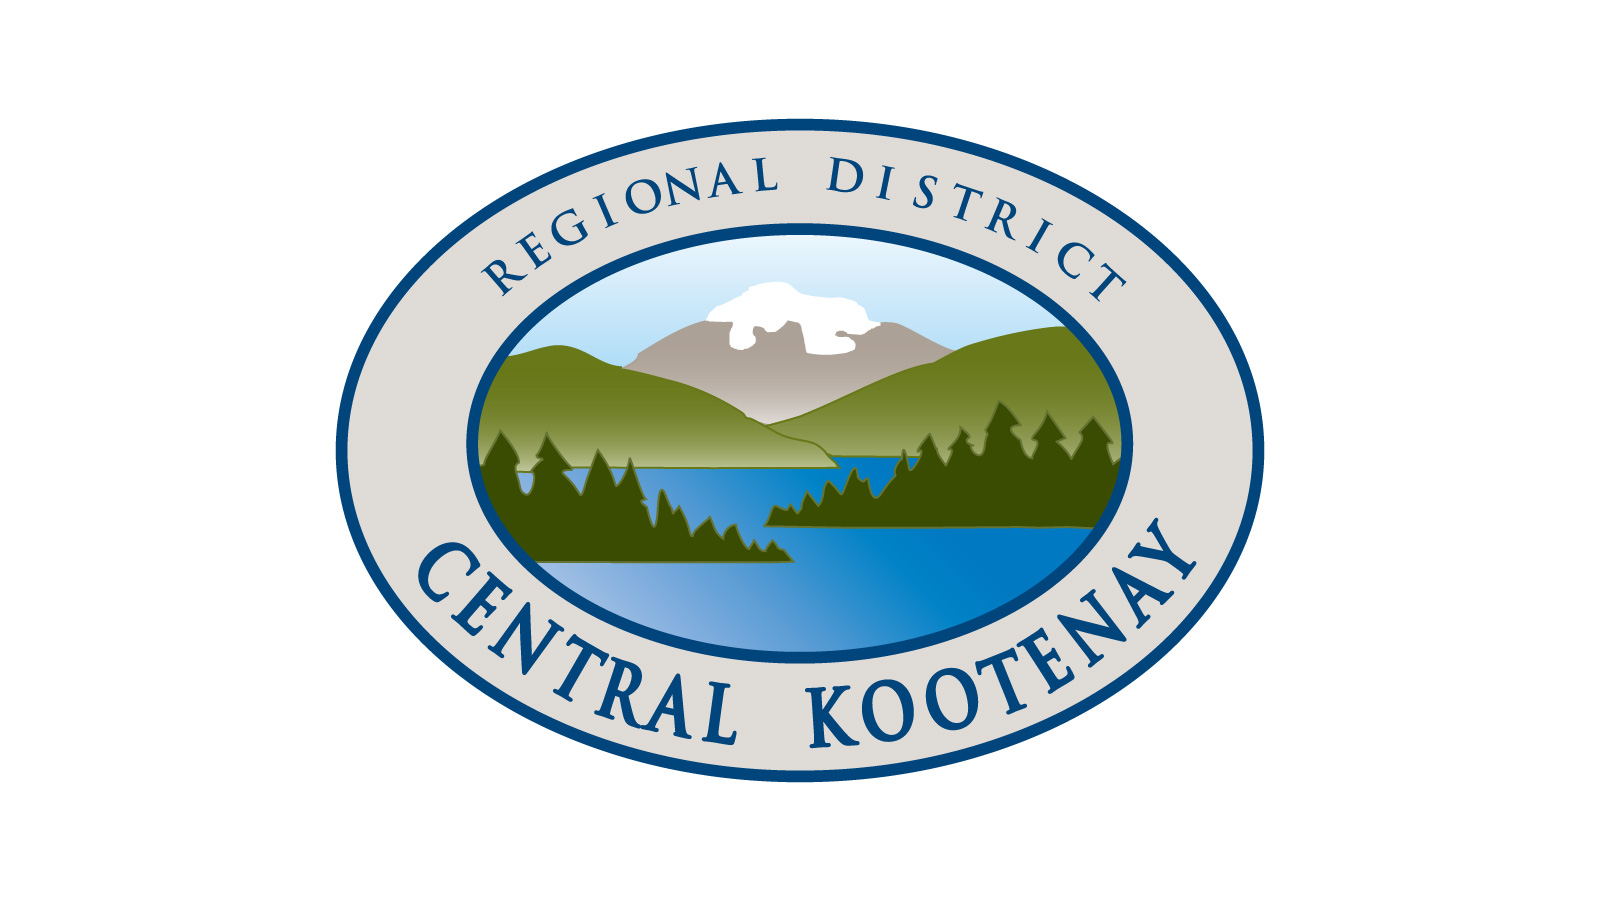 Regional district of central kootenay logo